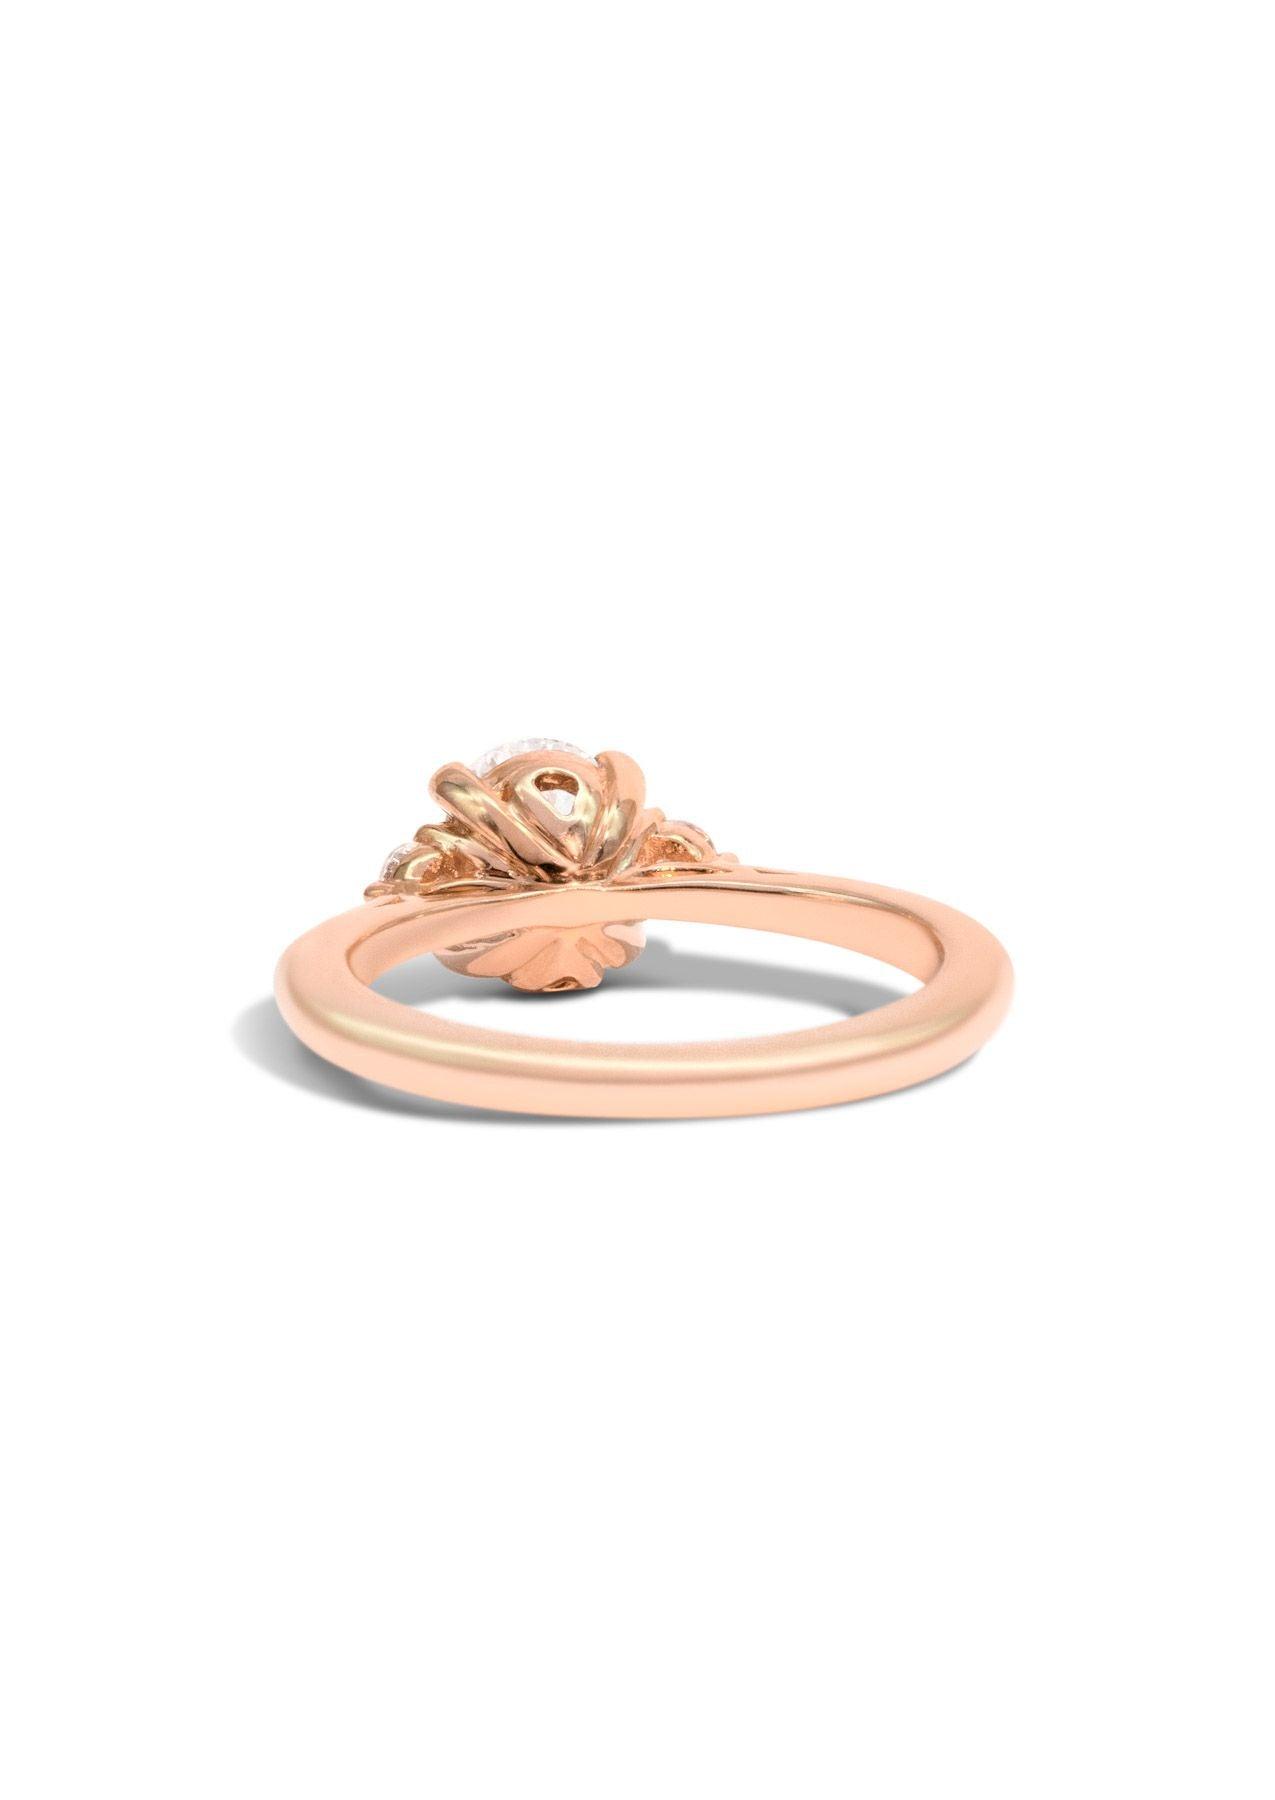 The Ada Rose Gold Cultured Diamond Ring